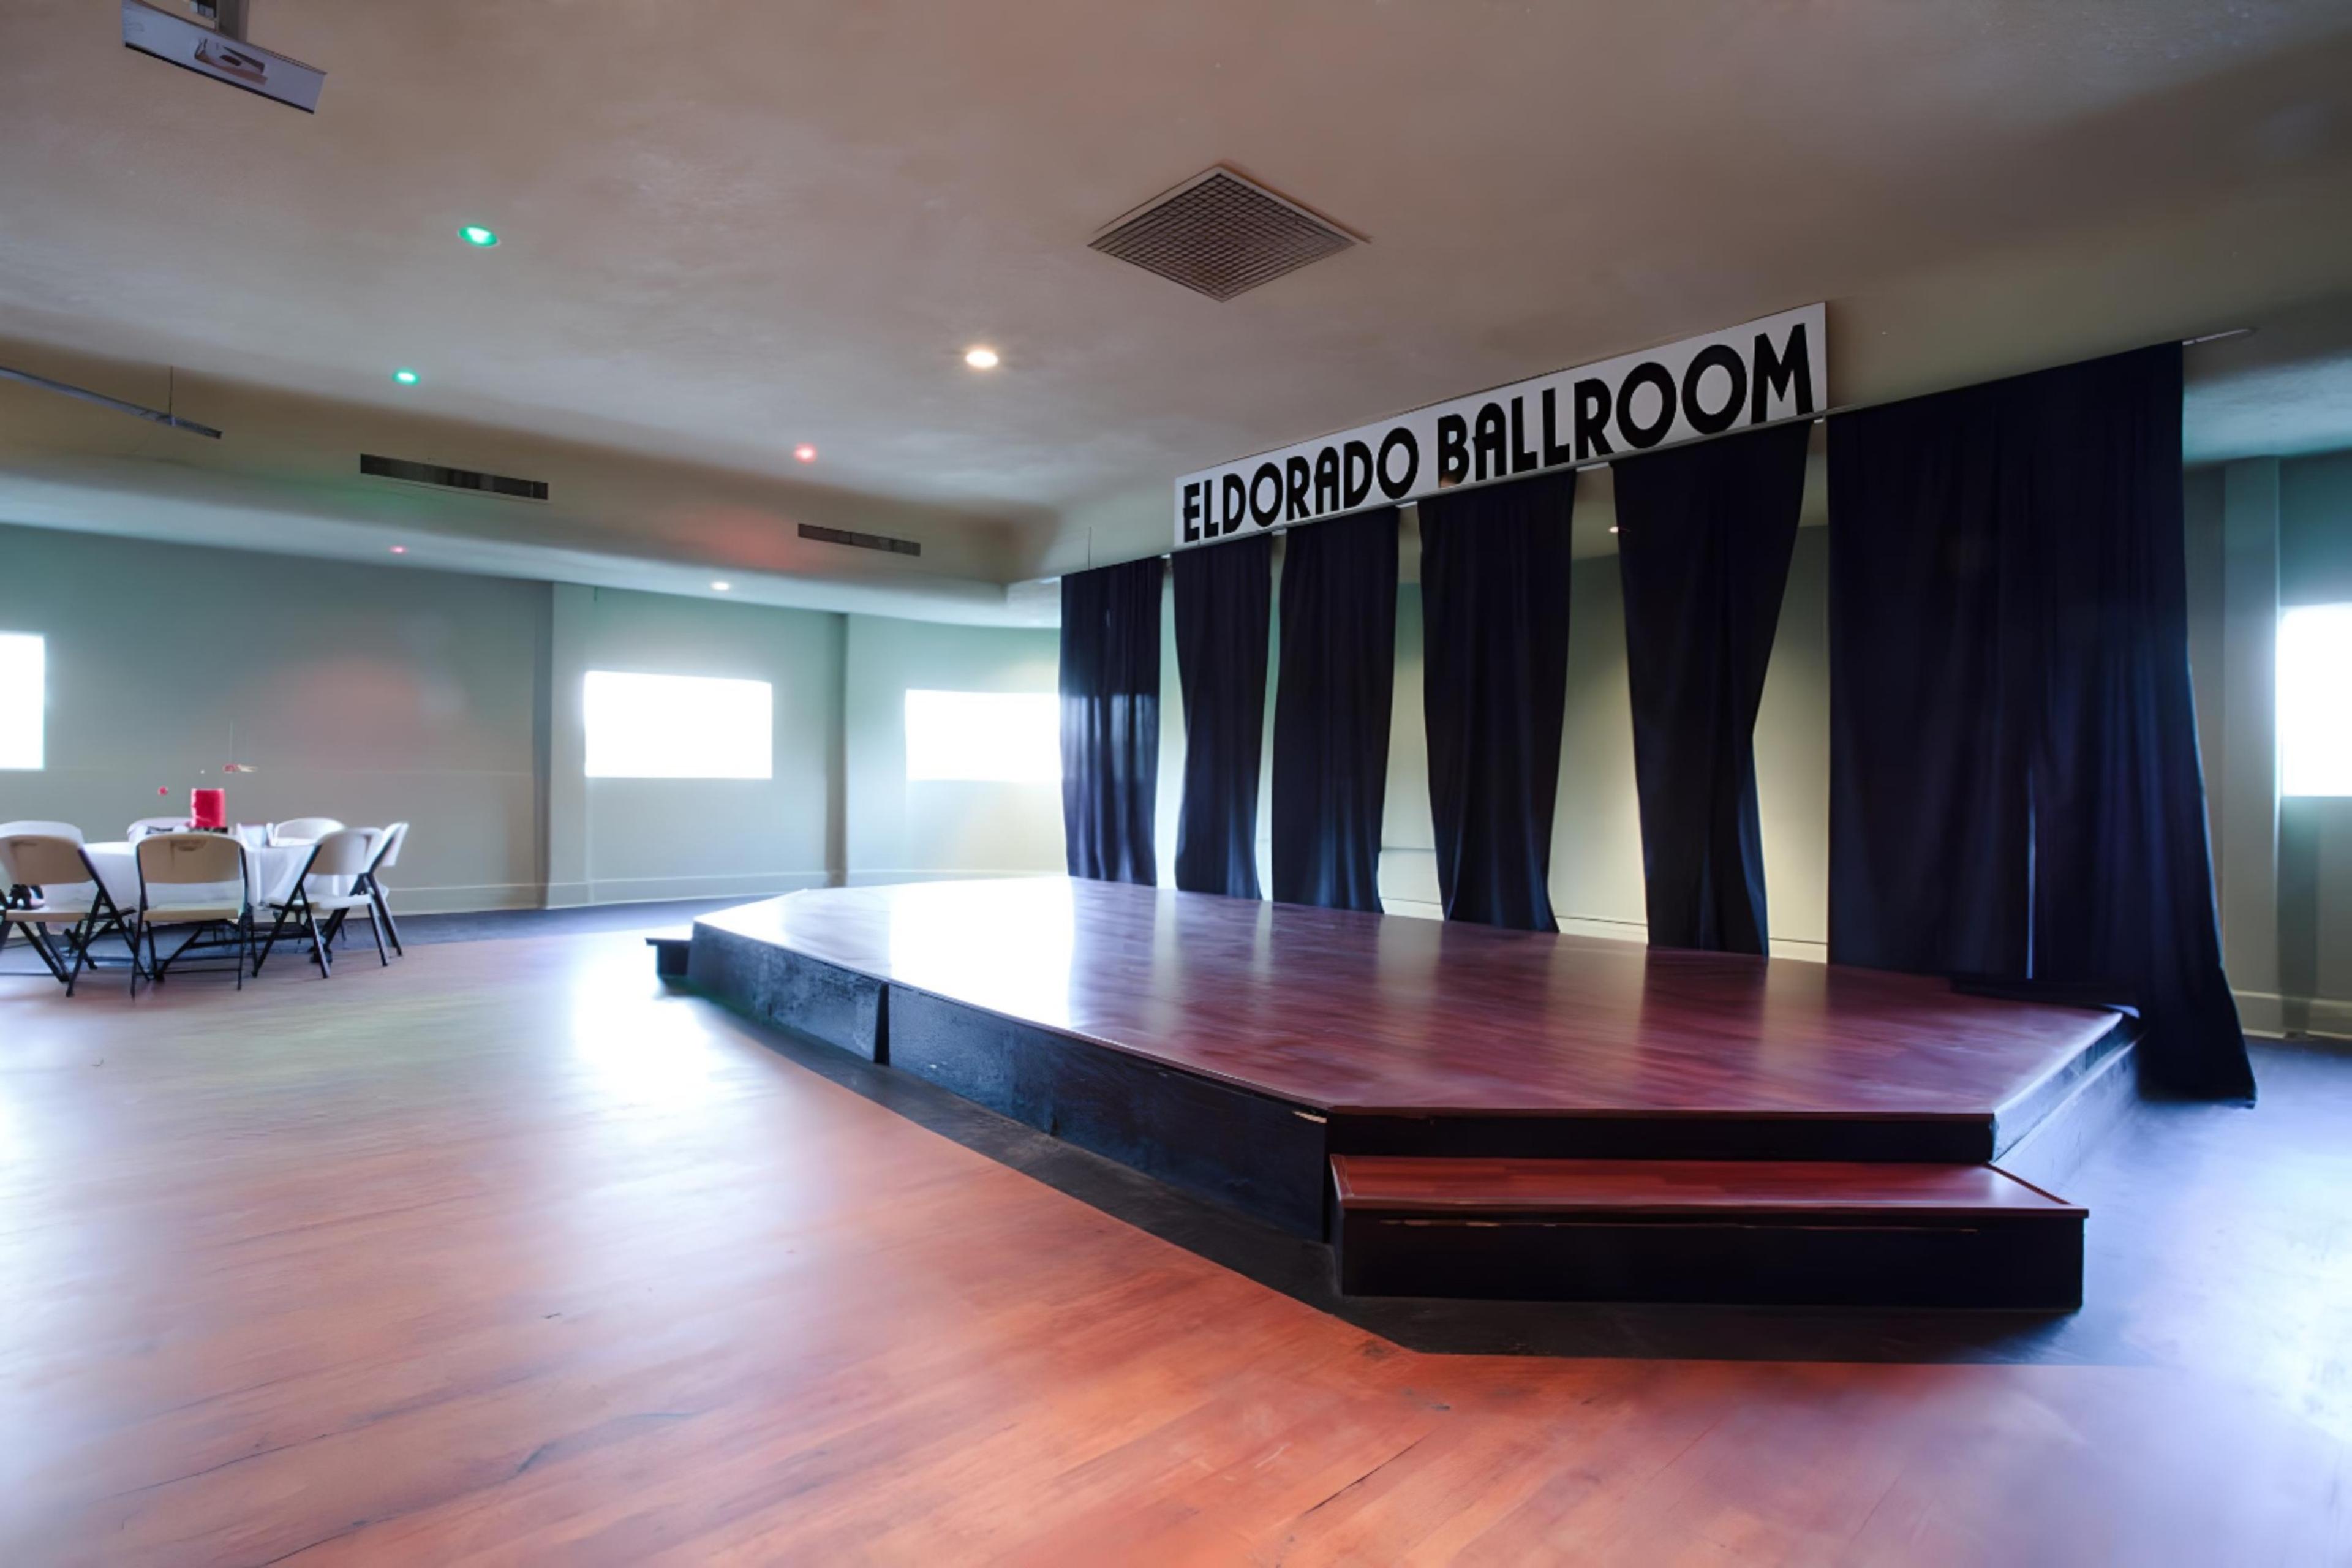 The Eldorado Ballroom